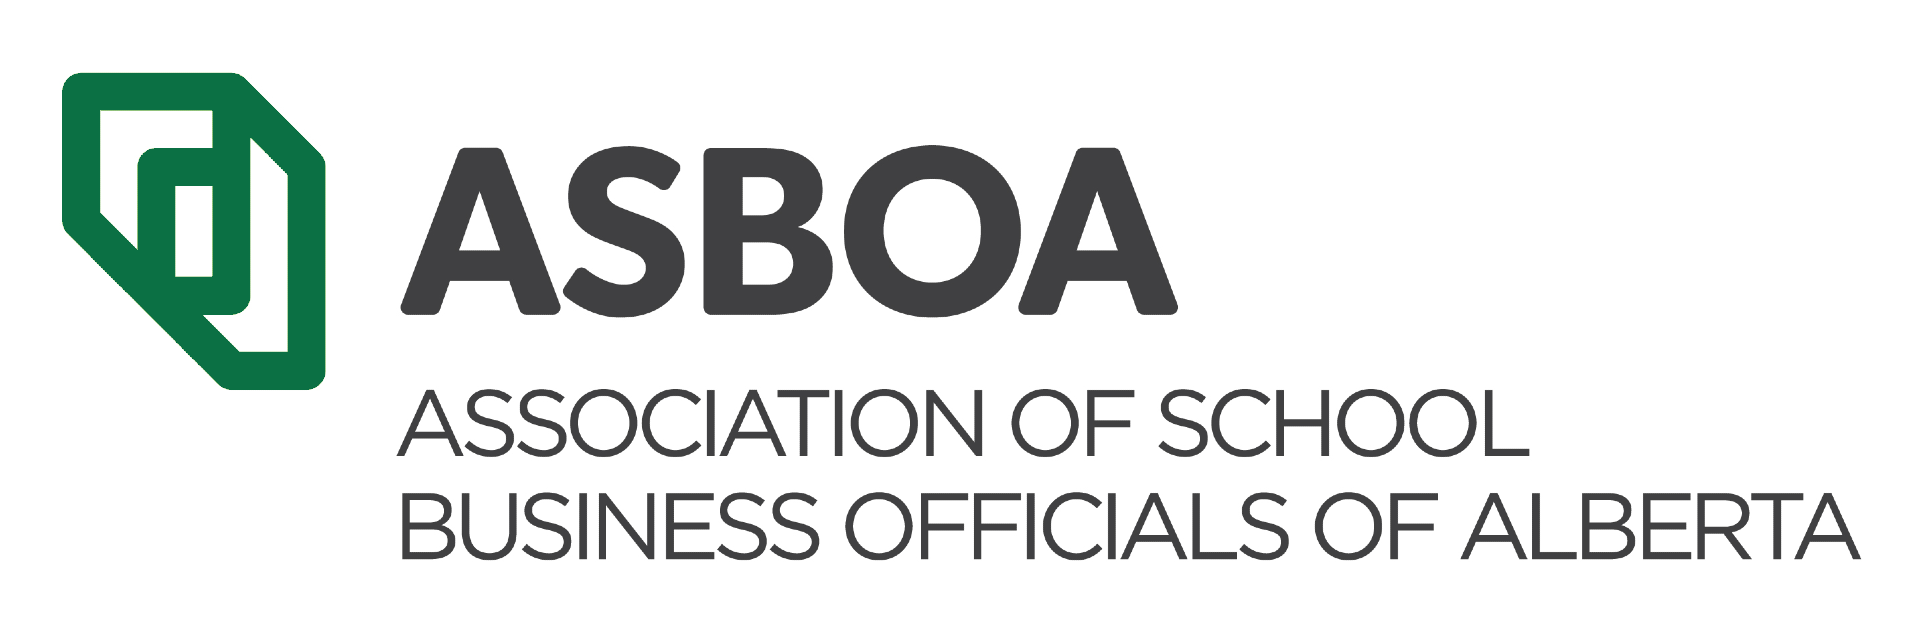 ASBOA logo